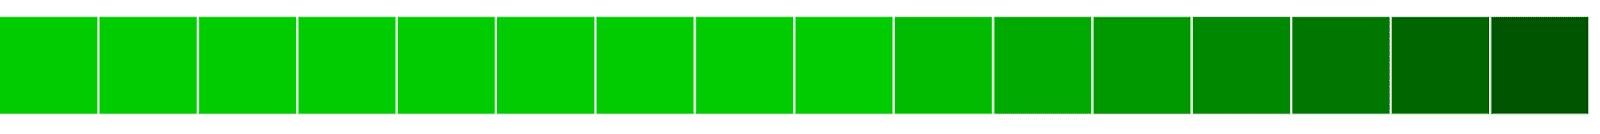 Horizontal alignment of green blocks going from light to dark.